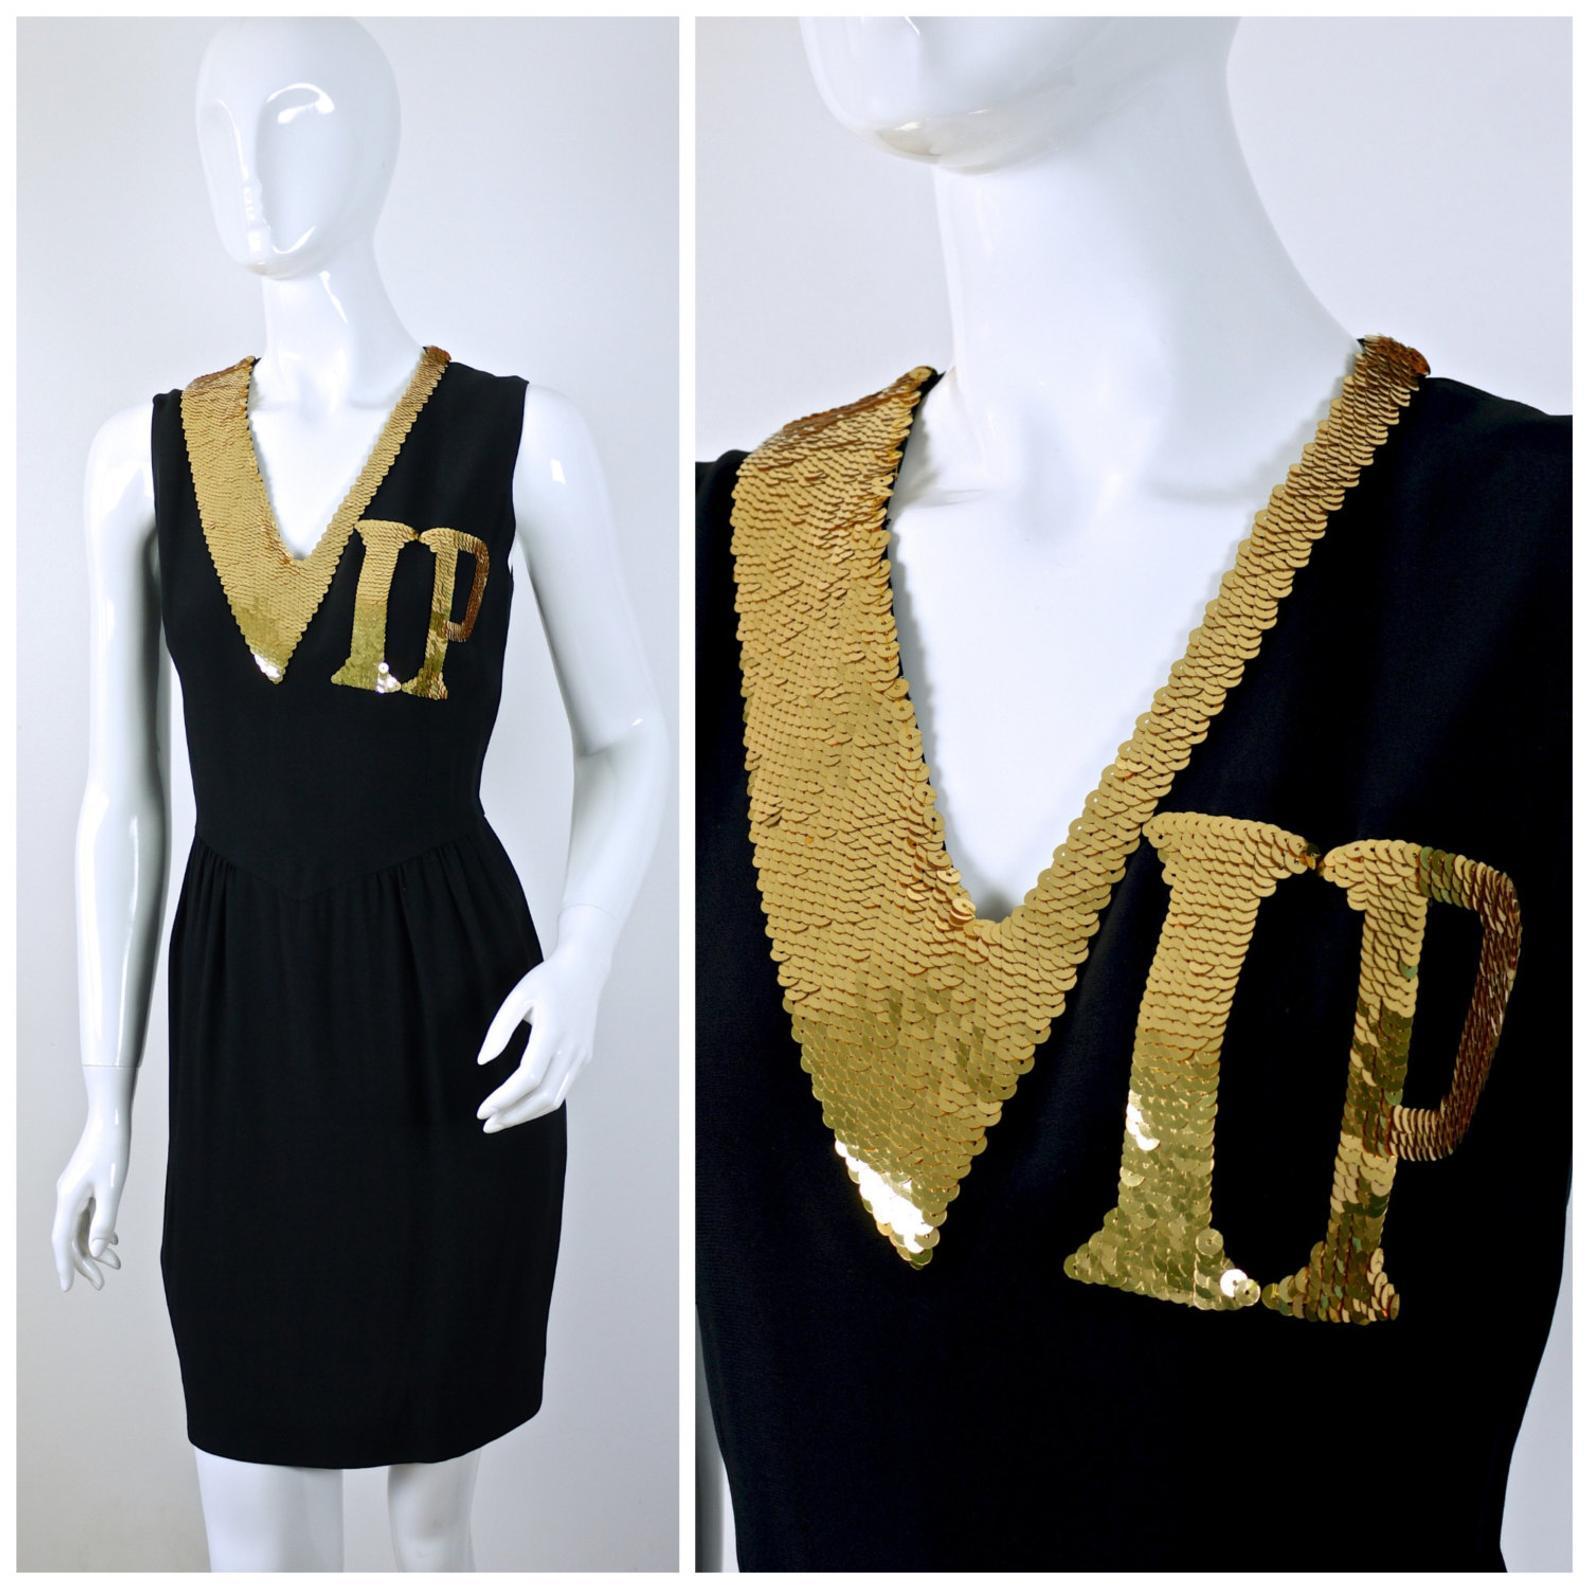 Women's Vintage RARE COUTURE VIP Black Dress For Sale